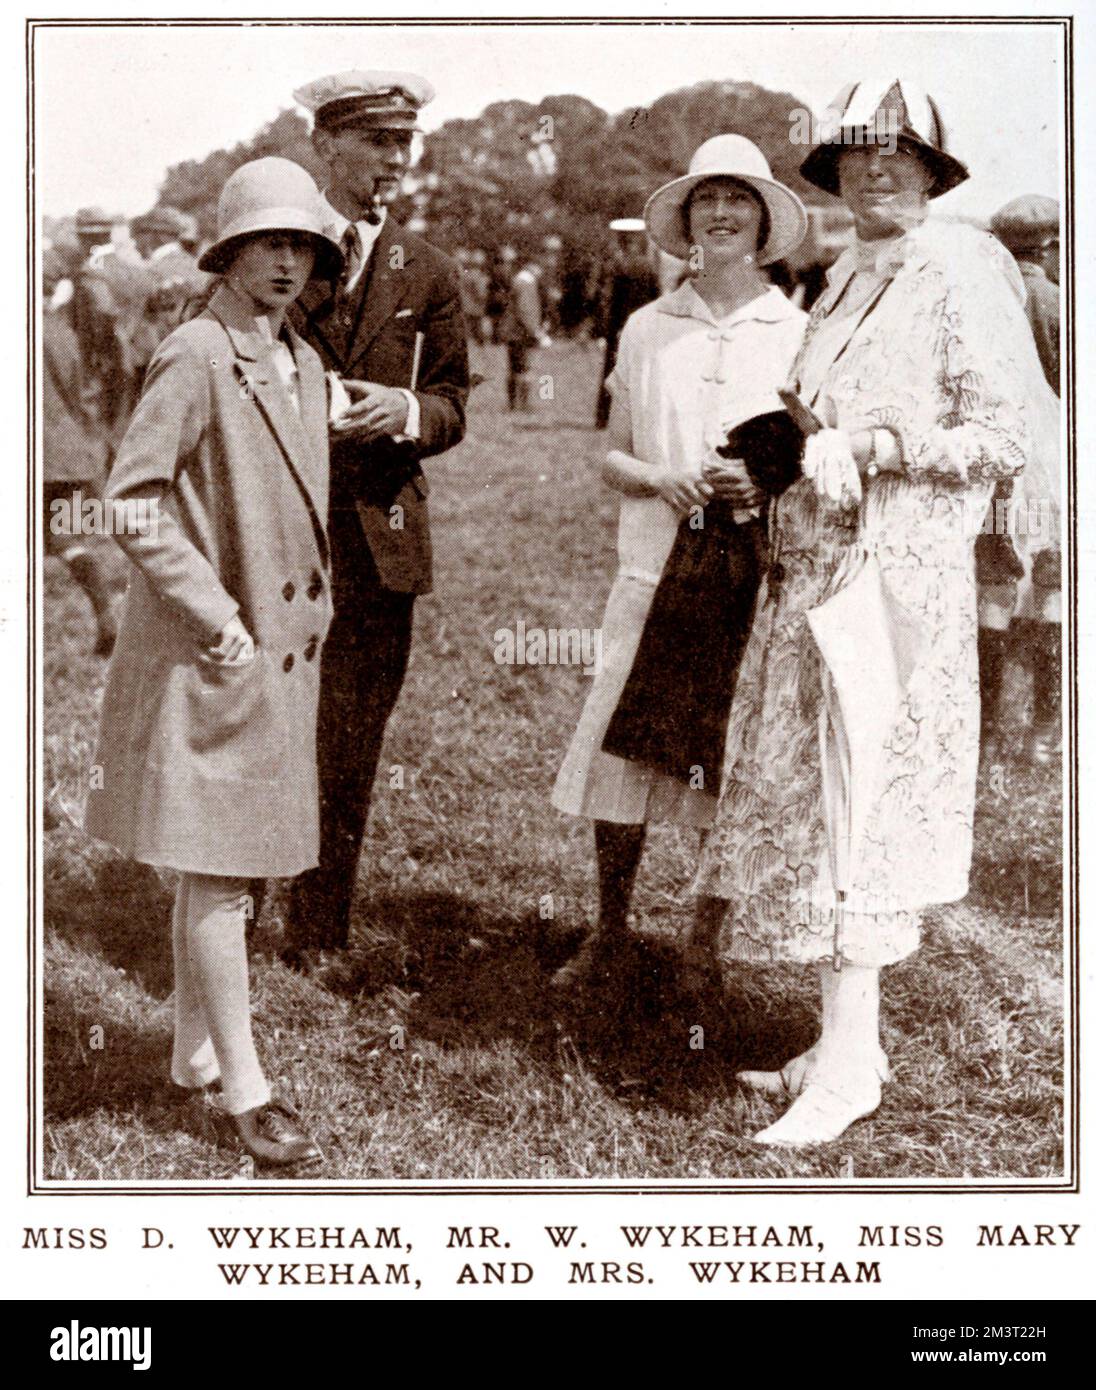 Wykeham, W. Wykeham, Mary Wykeham e Wykeham alla fiera agricola dell'isola di Wight. Foto Stock